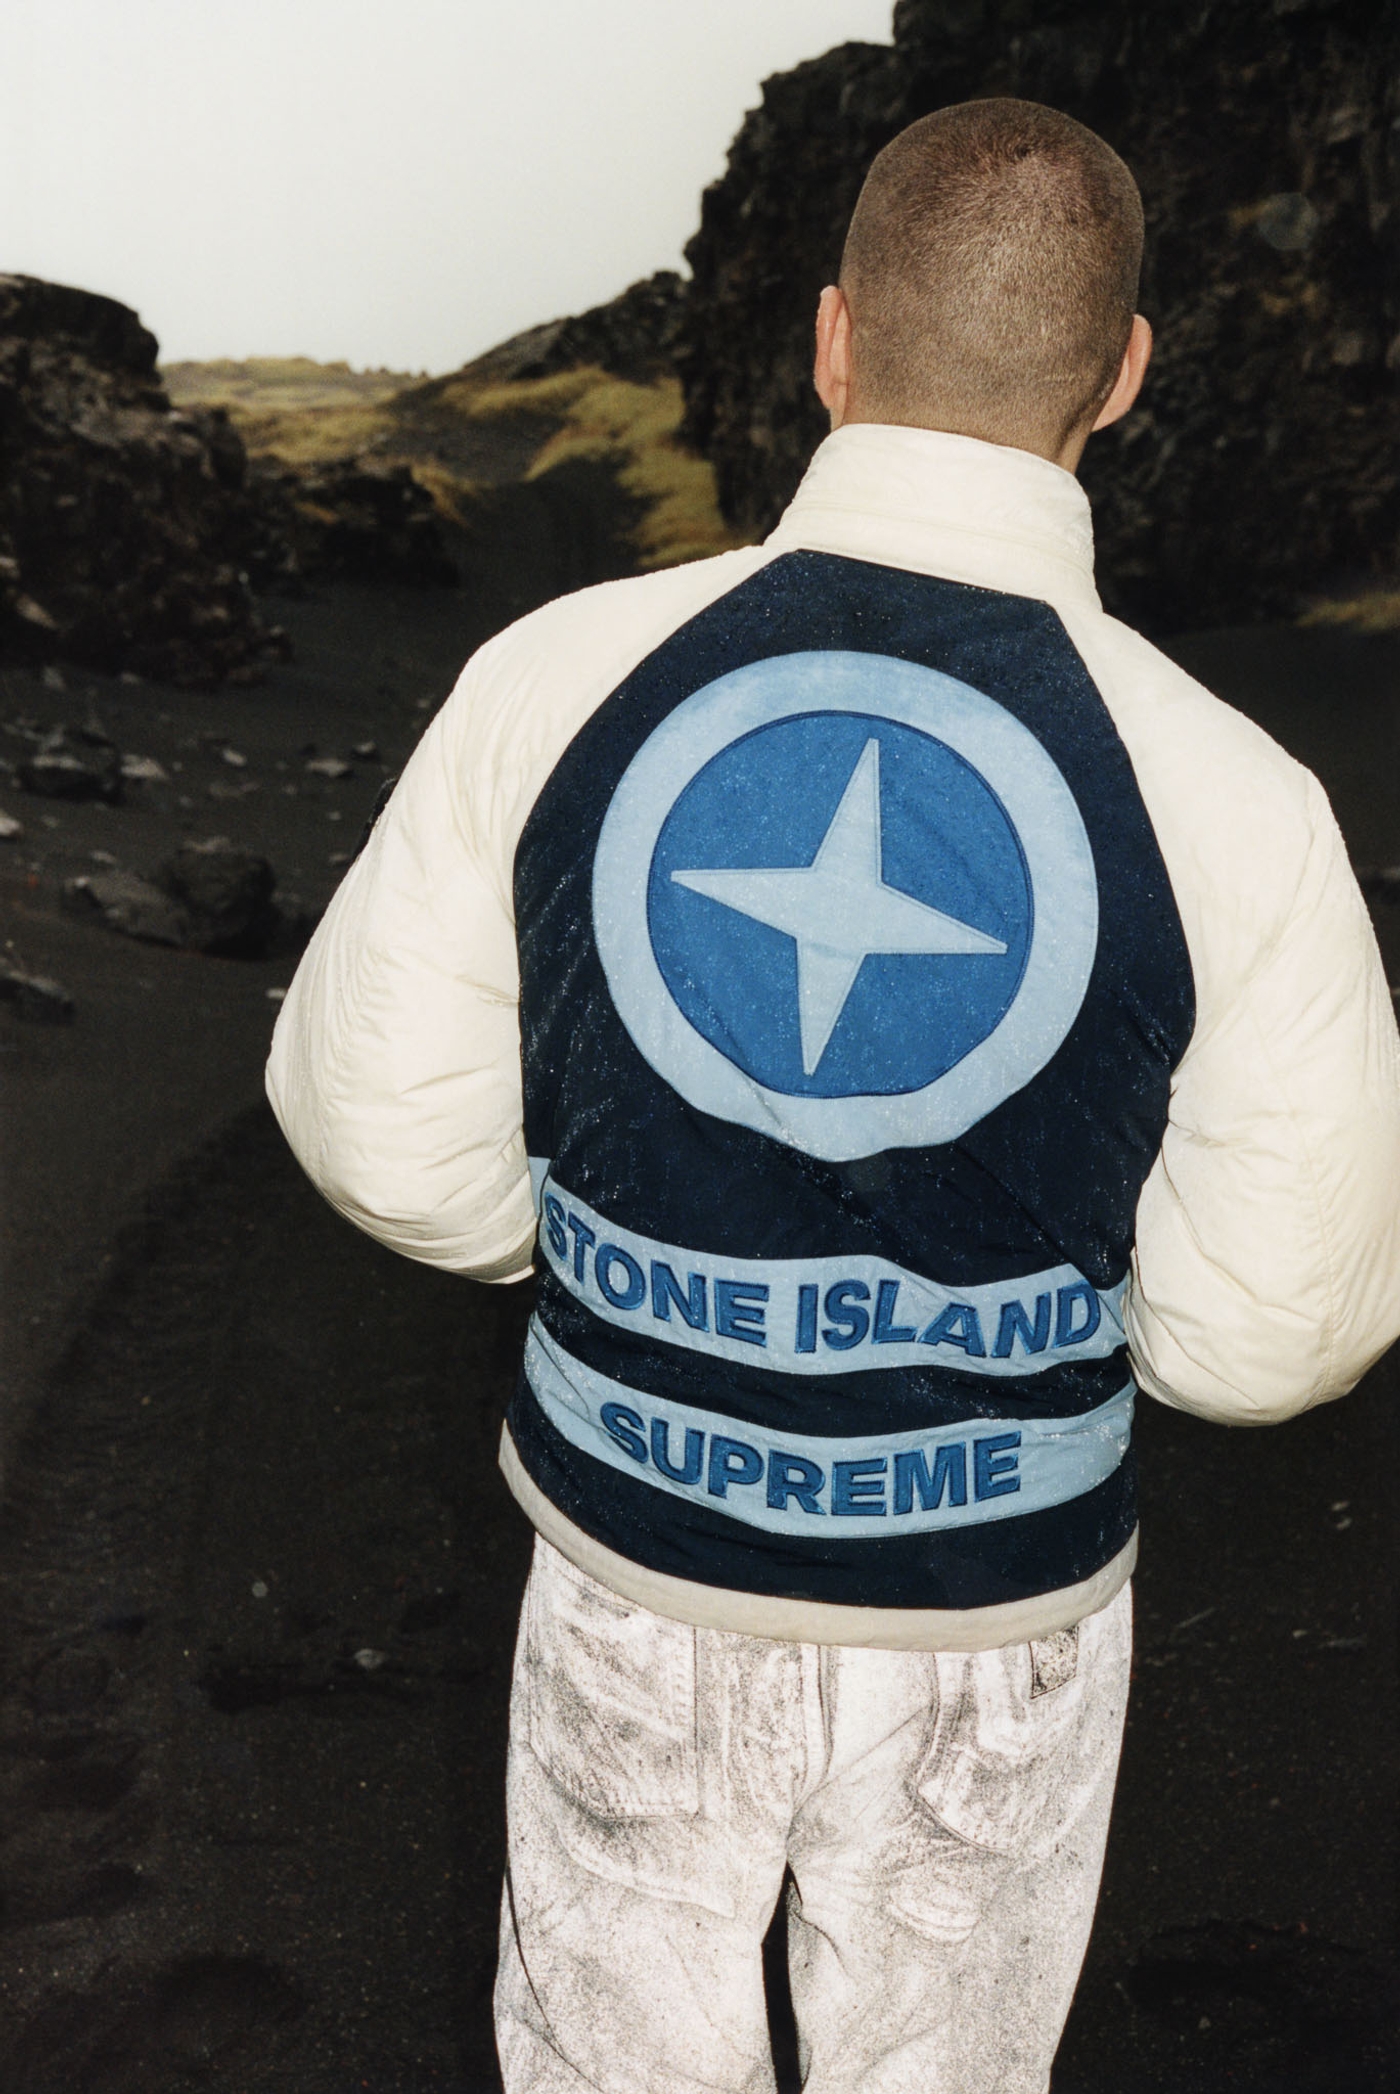 Supreme®/Stone Island® (5/86)